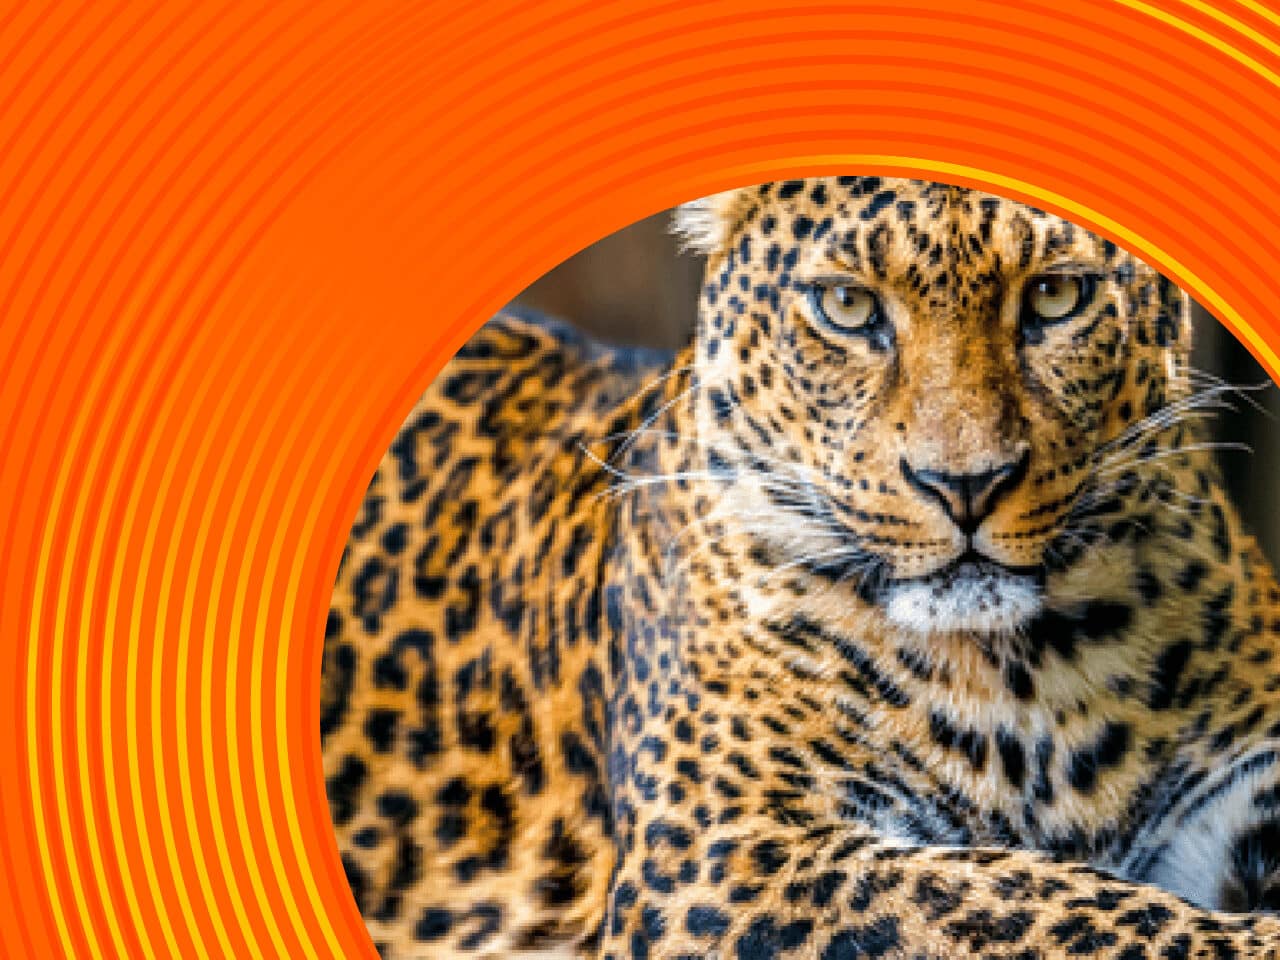 A leopard can’t change its spots